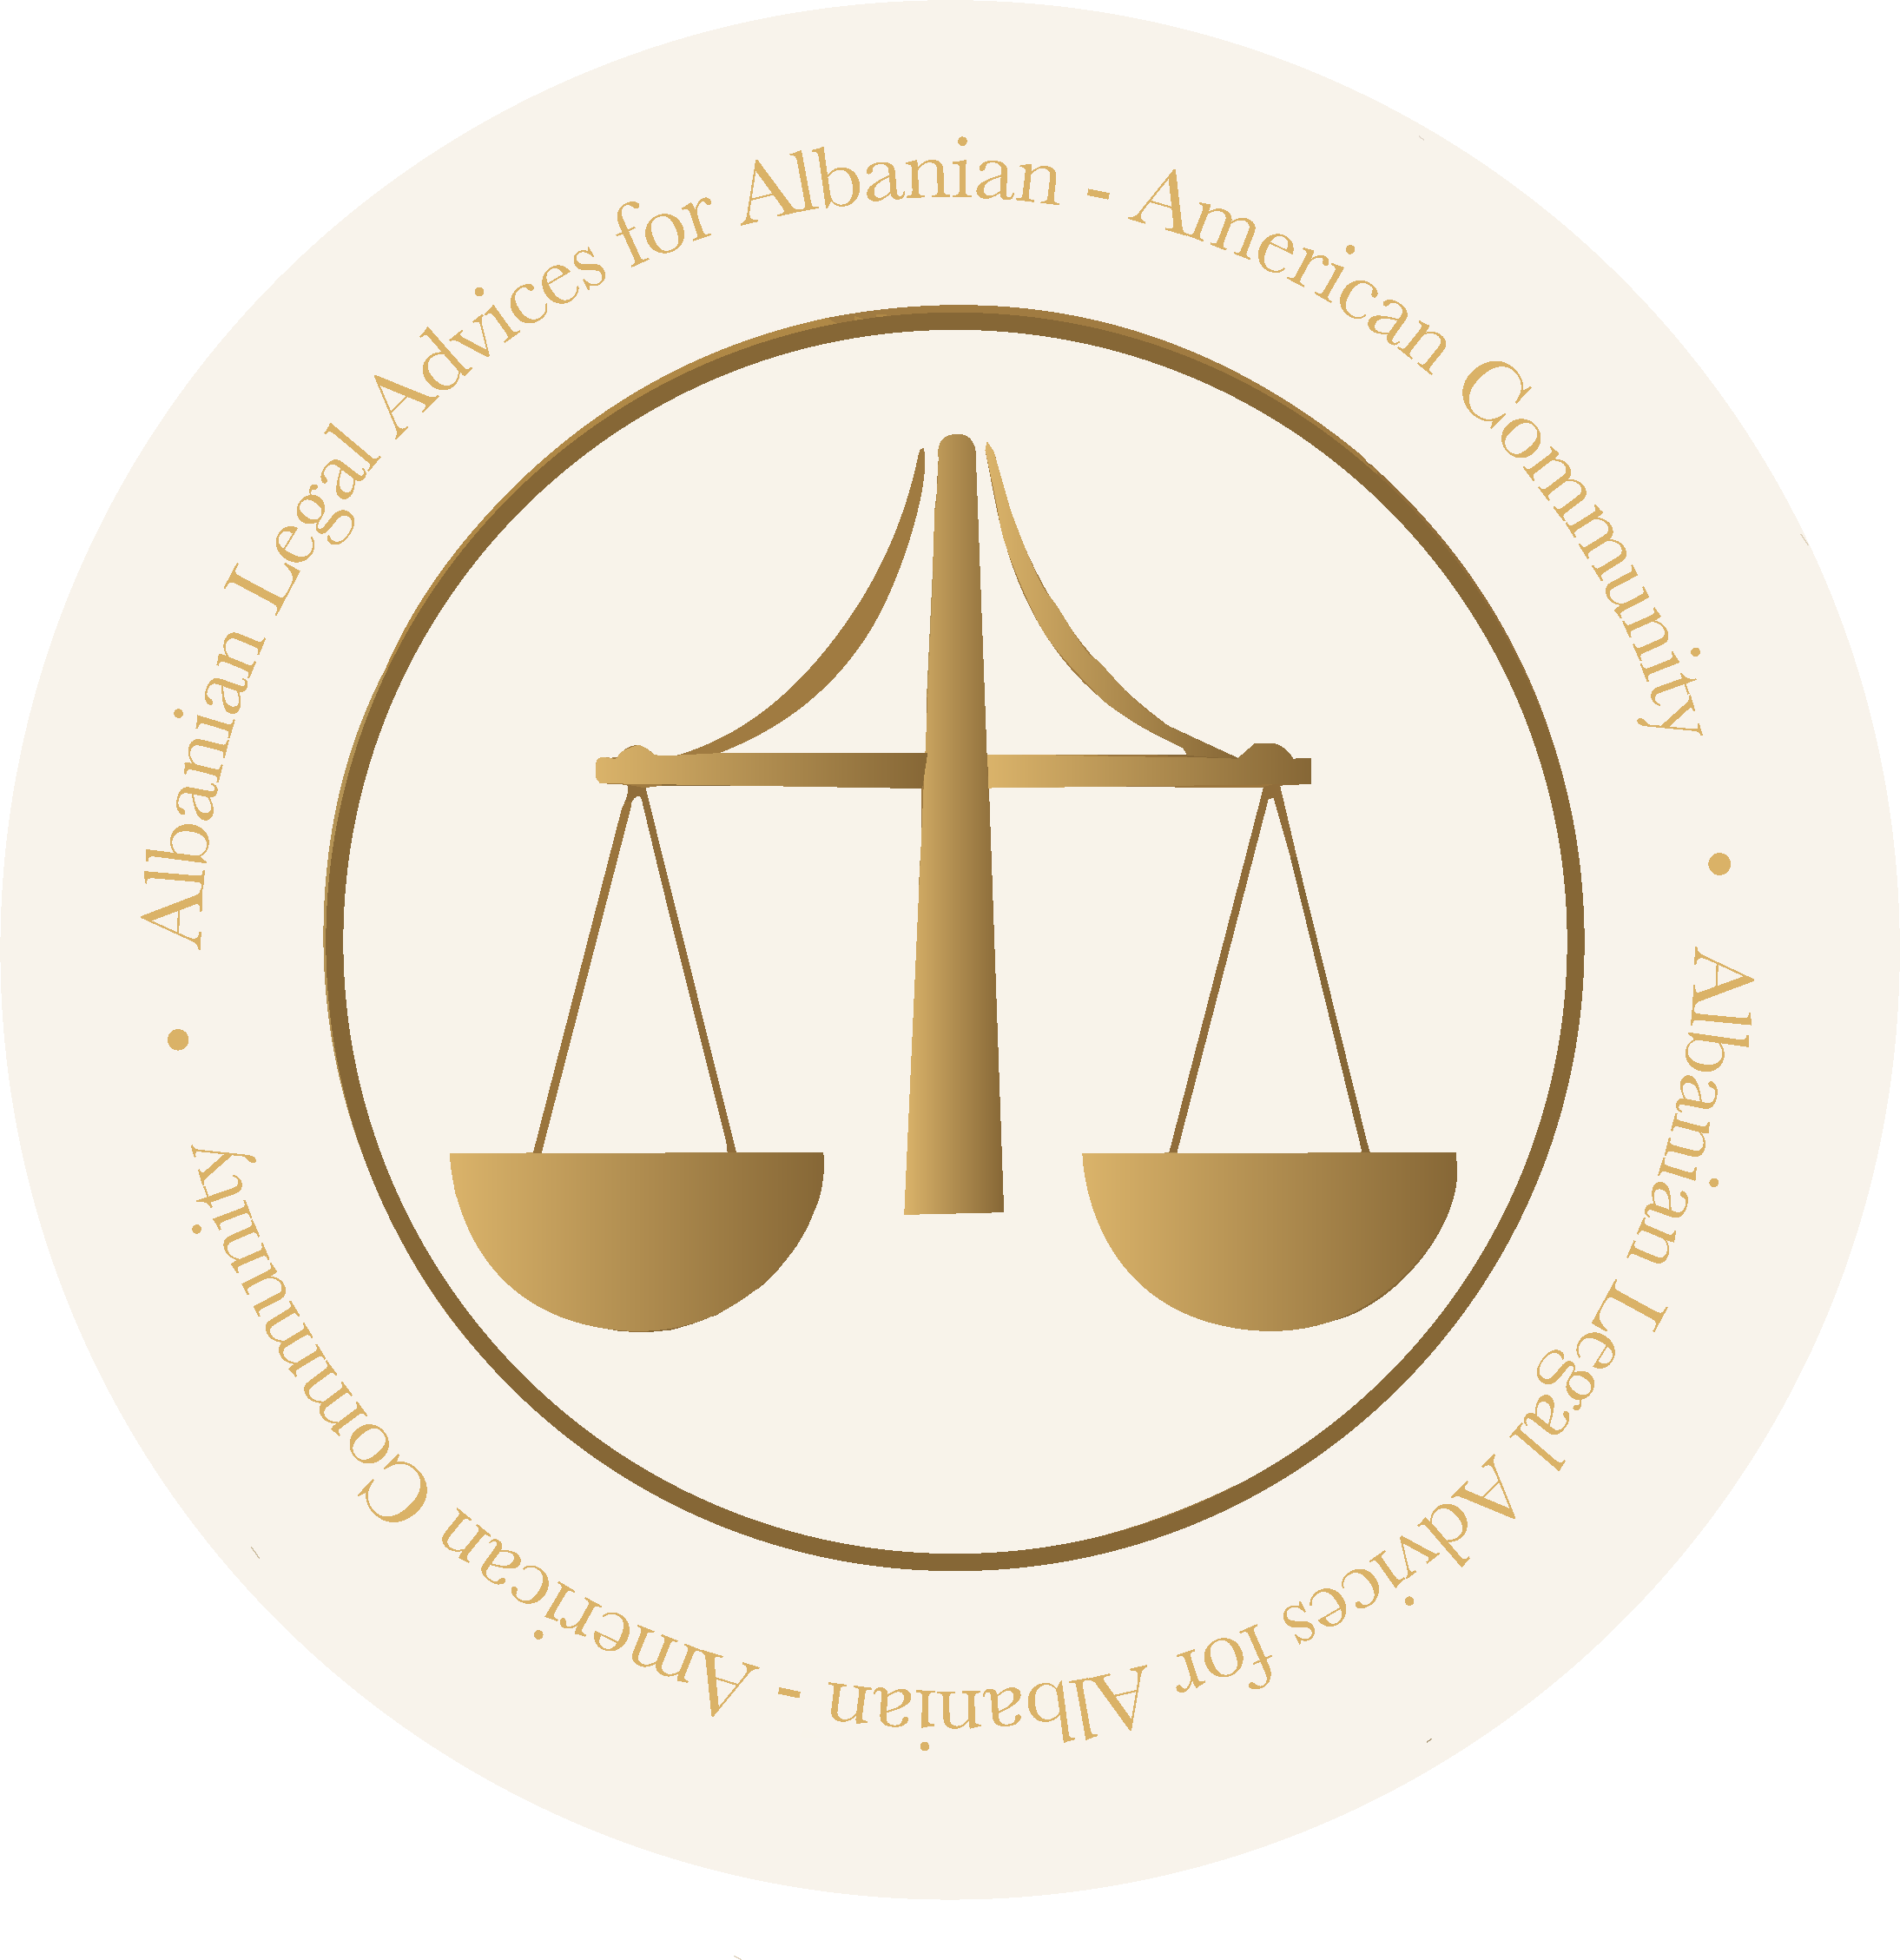 Albanian Legal Advice for Albanian-American Community